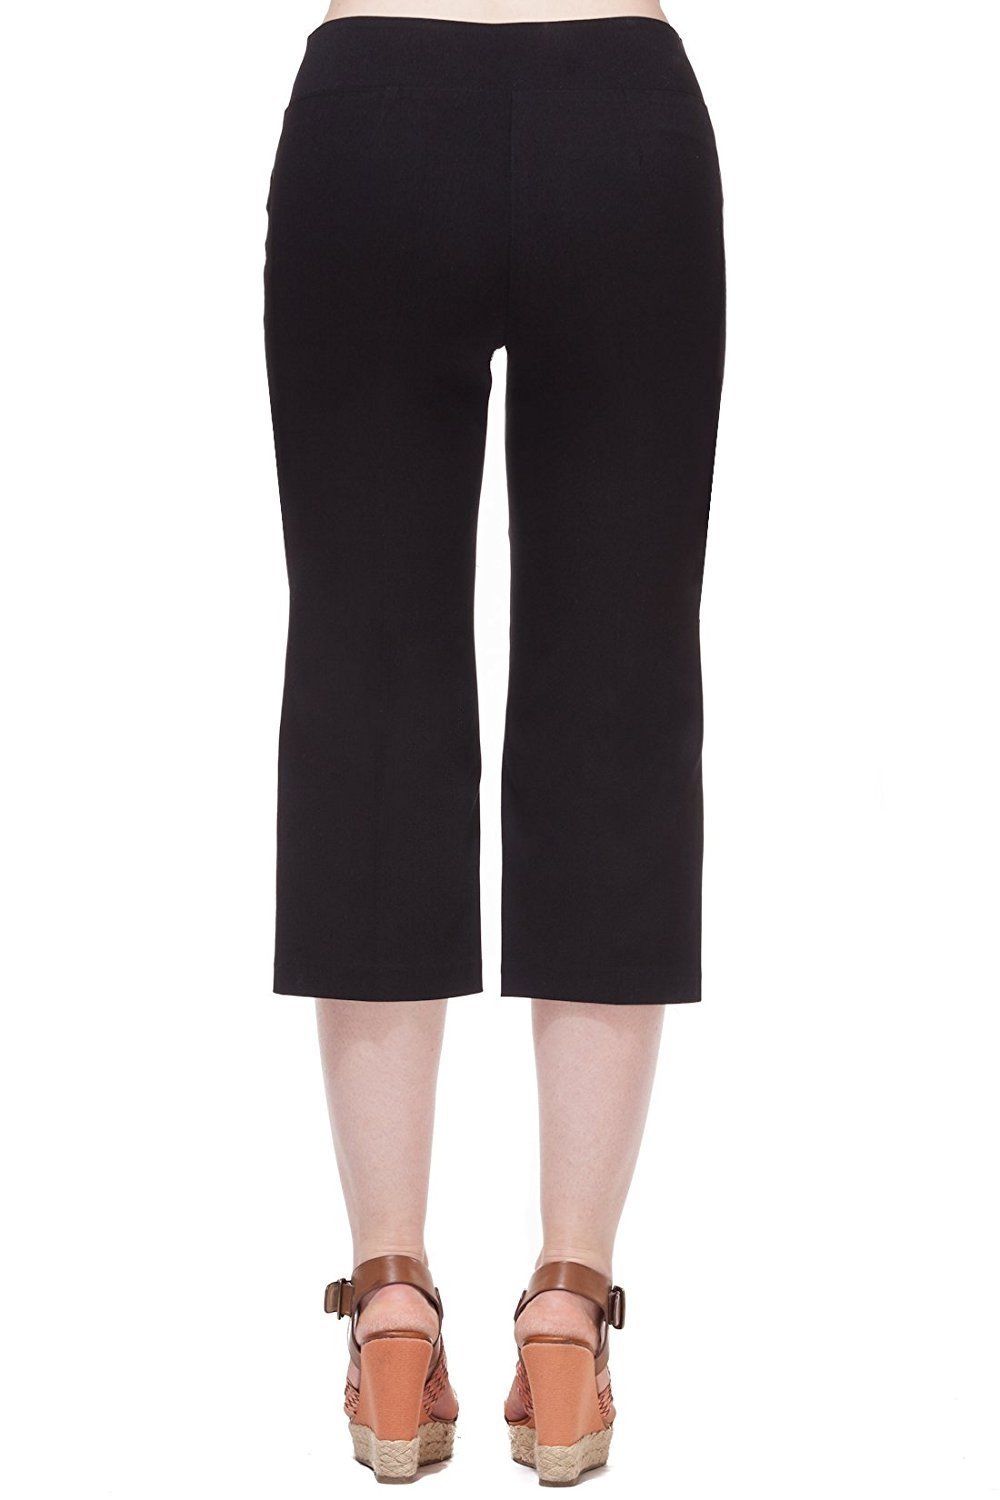 Women's Pull-On Comfort Fit Capri Dress Pants - image 3 of 3